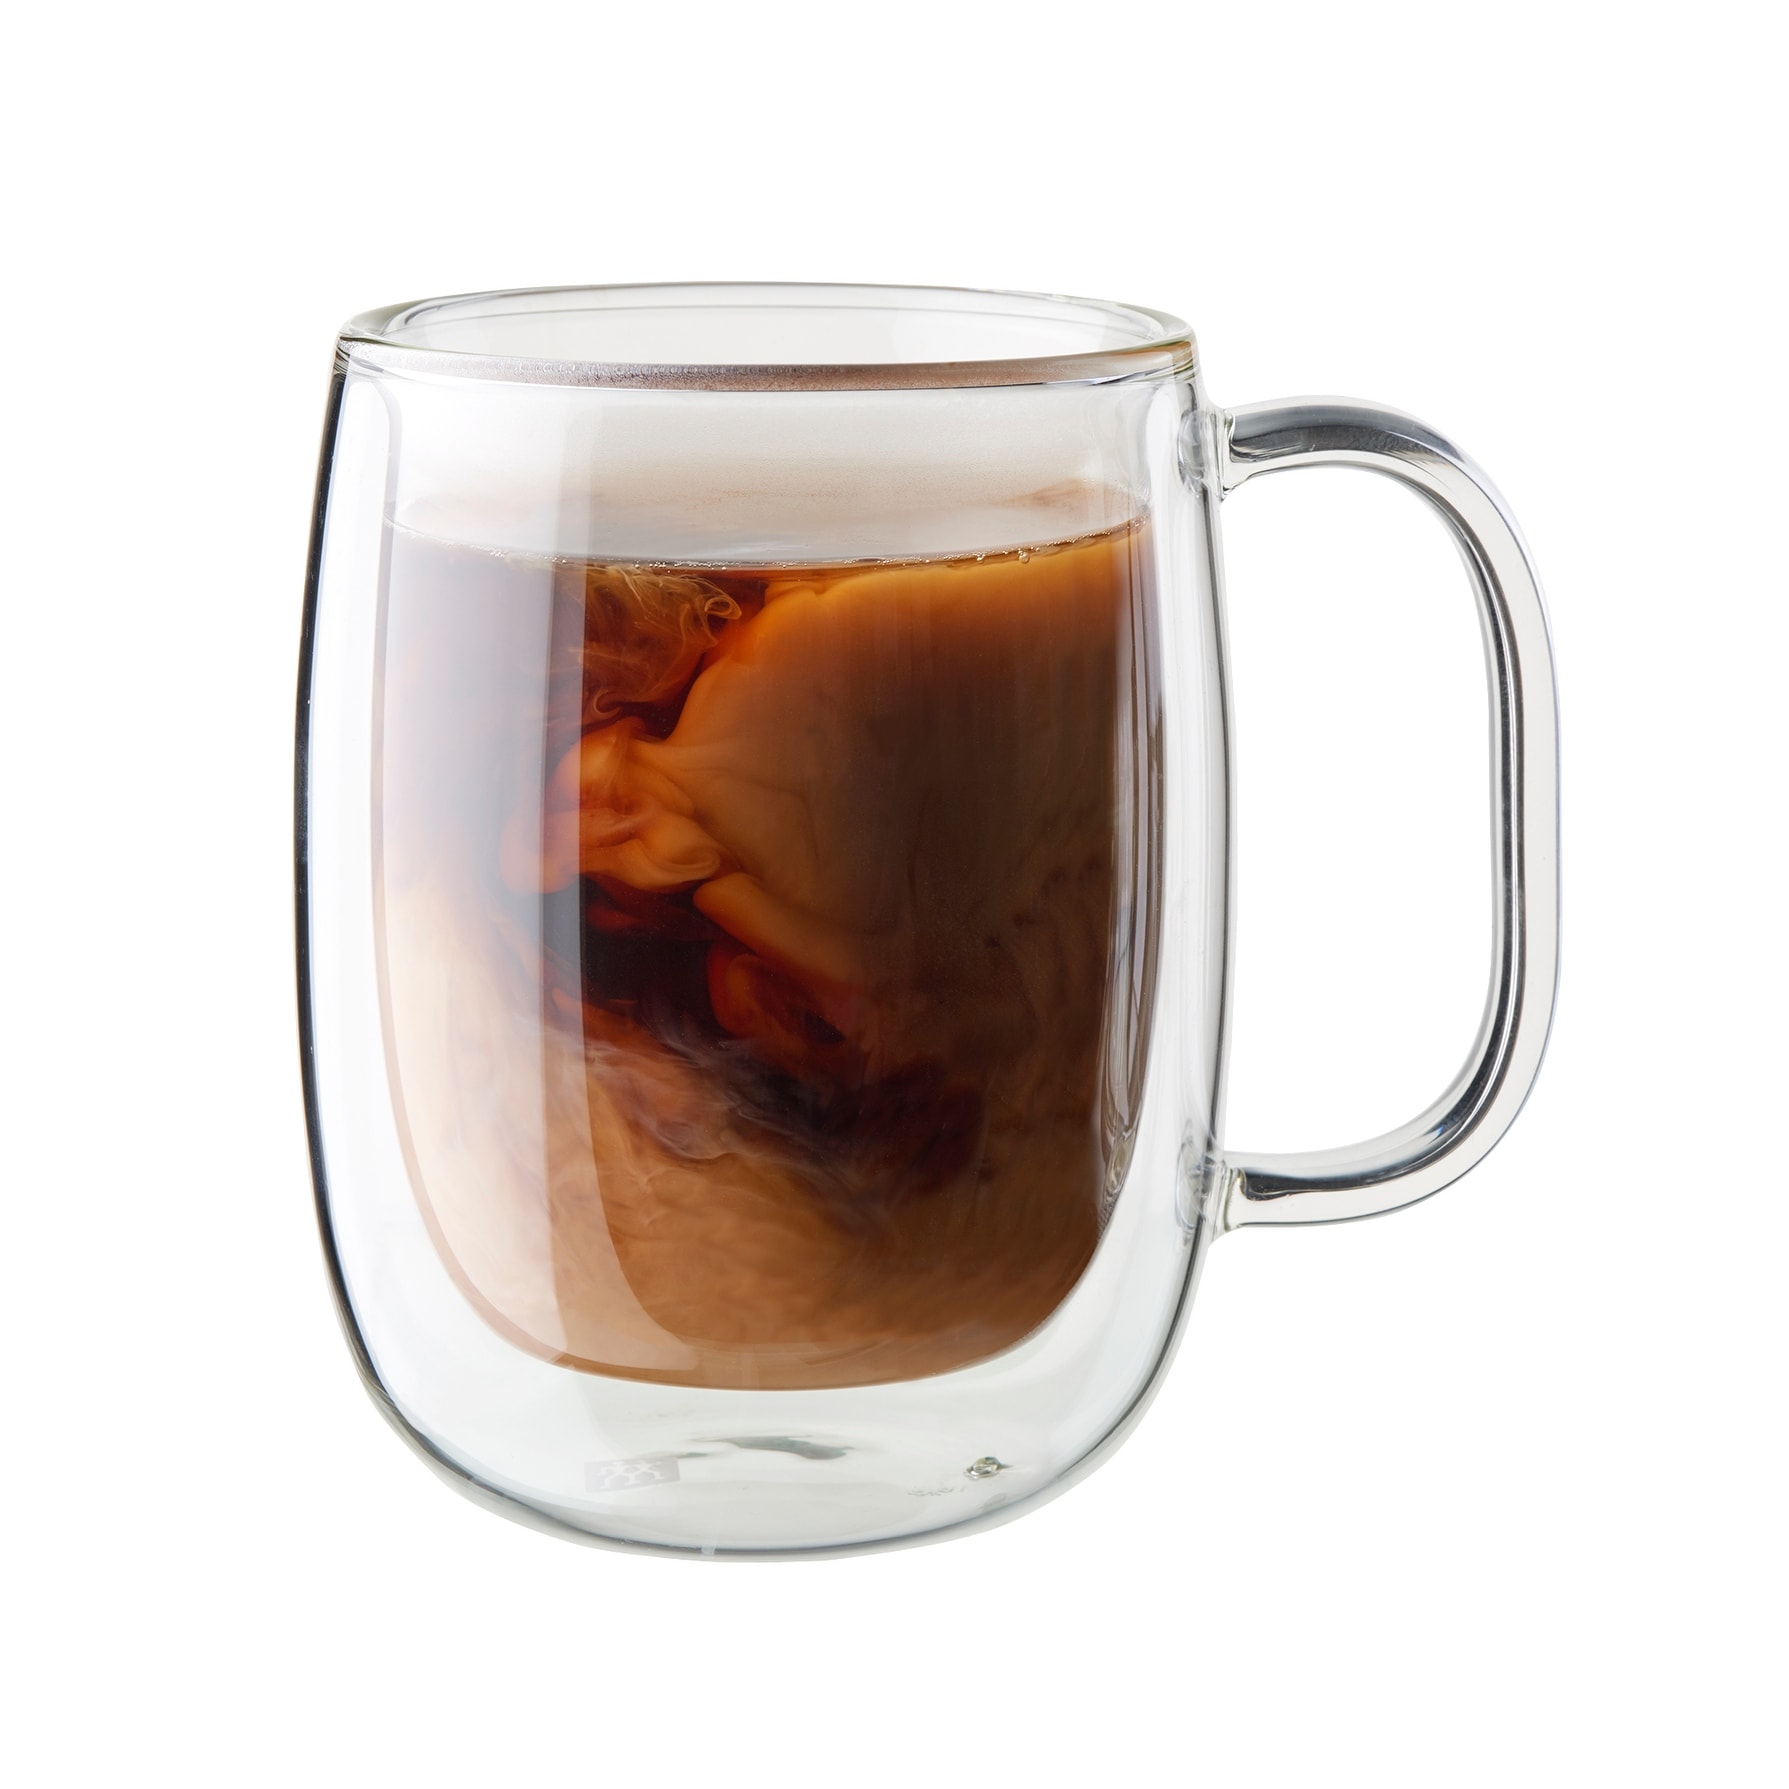 ZWILLING Sorrento Double Wall Glassware 4-pc Coffee Glass Mug Holiday Set